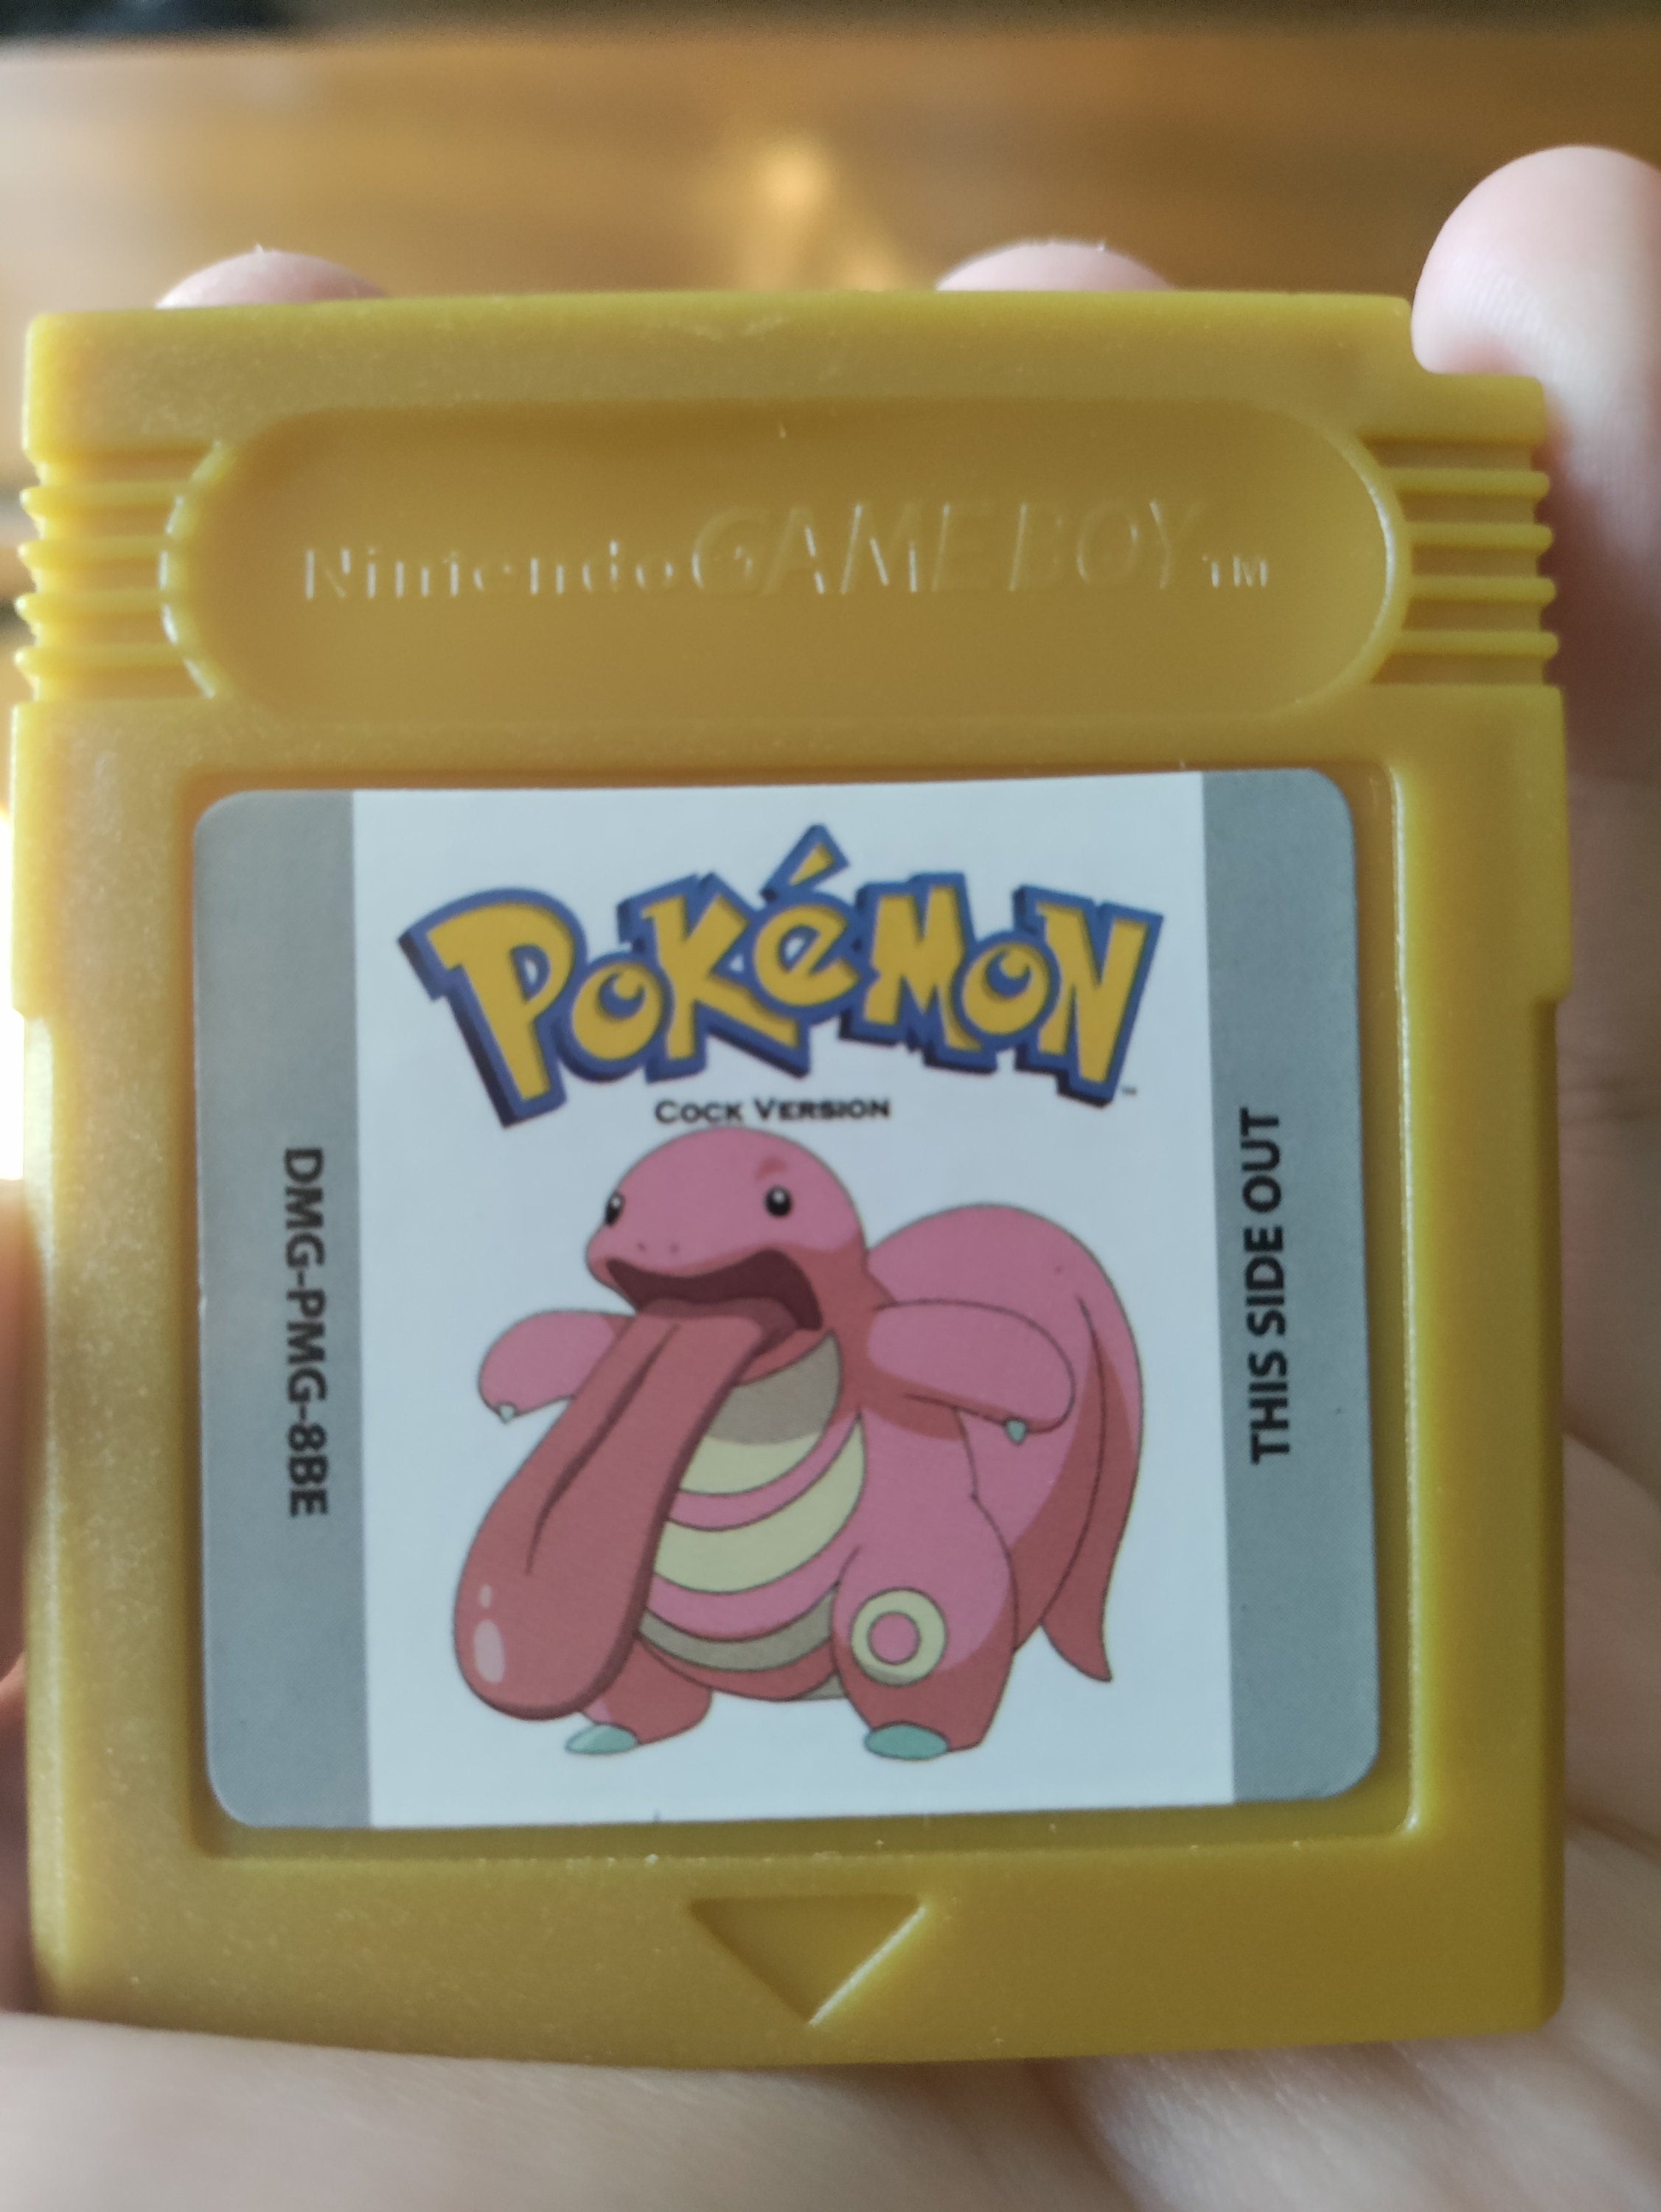 Pokemon cock edition